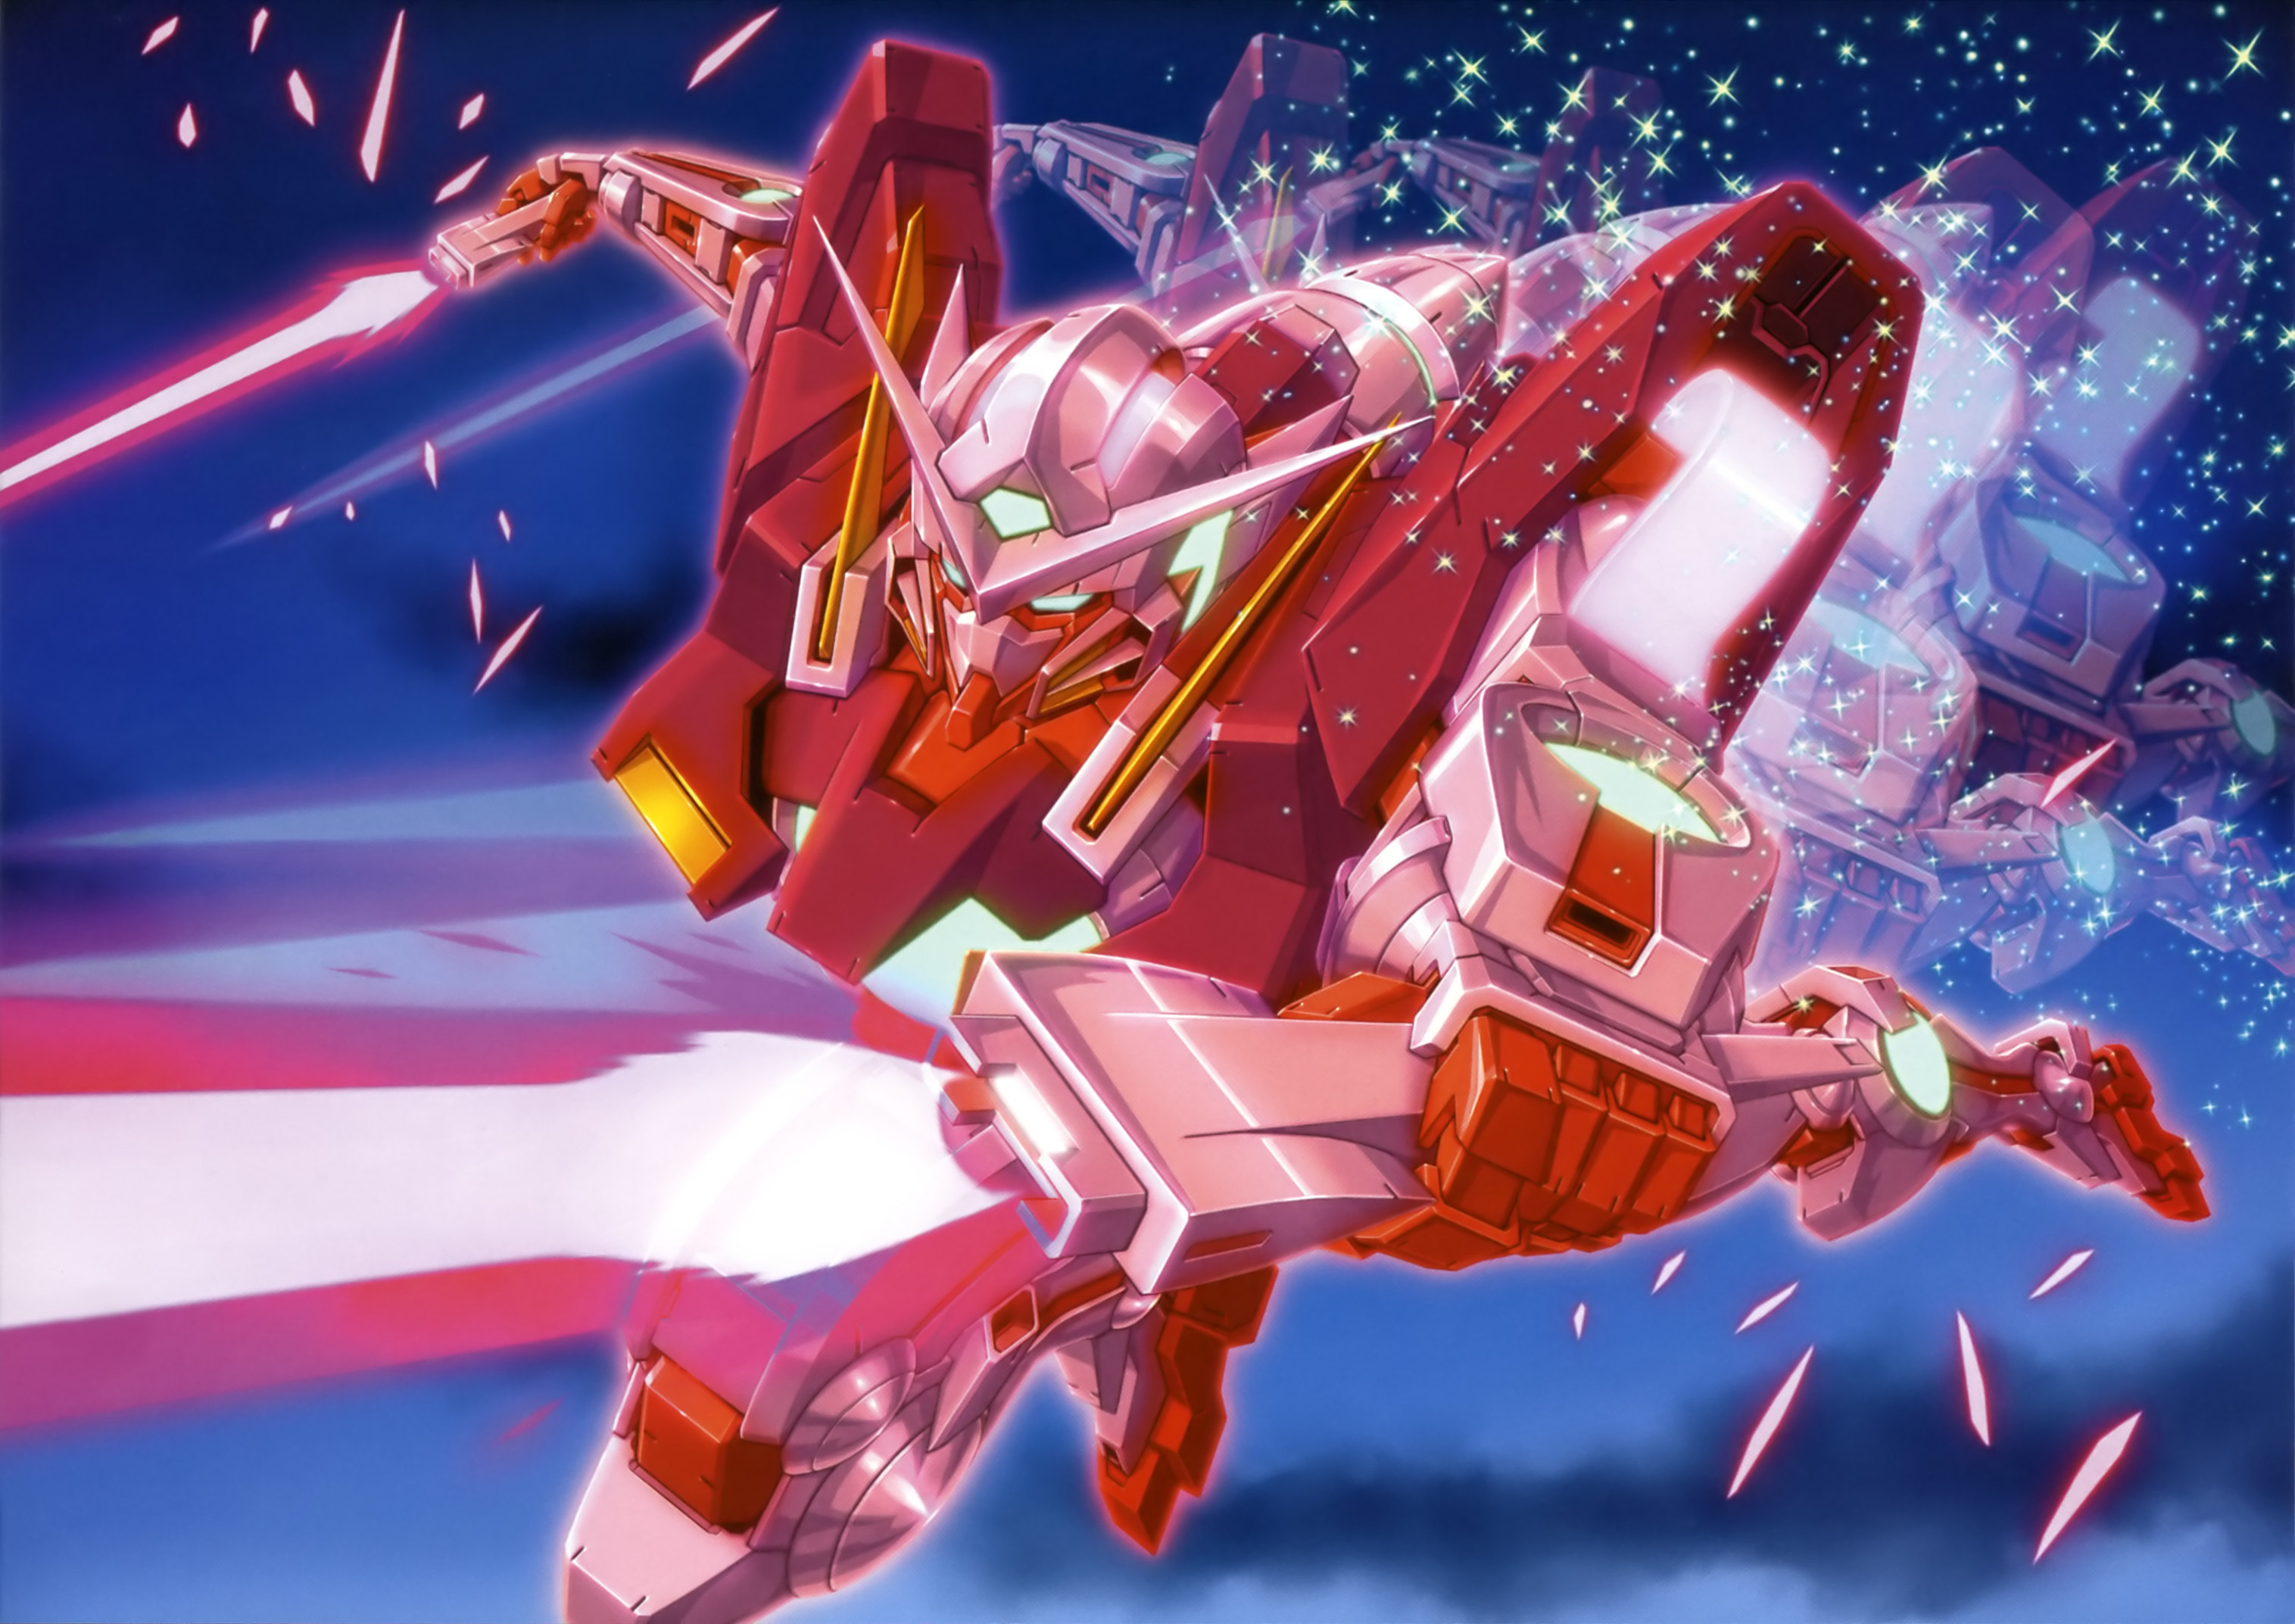 Anime Mobile Suit Gundam 00 3031x2145